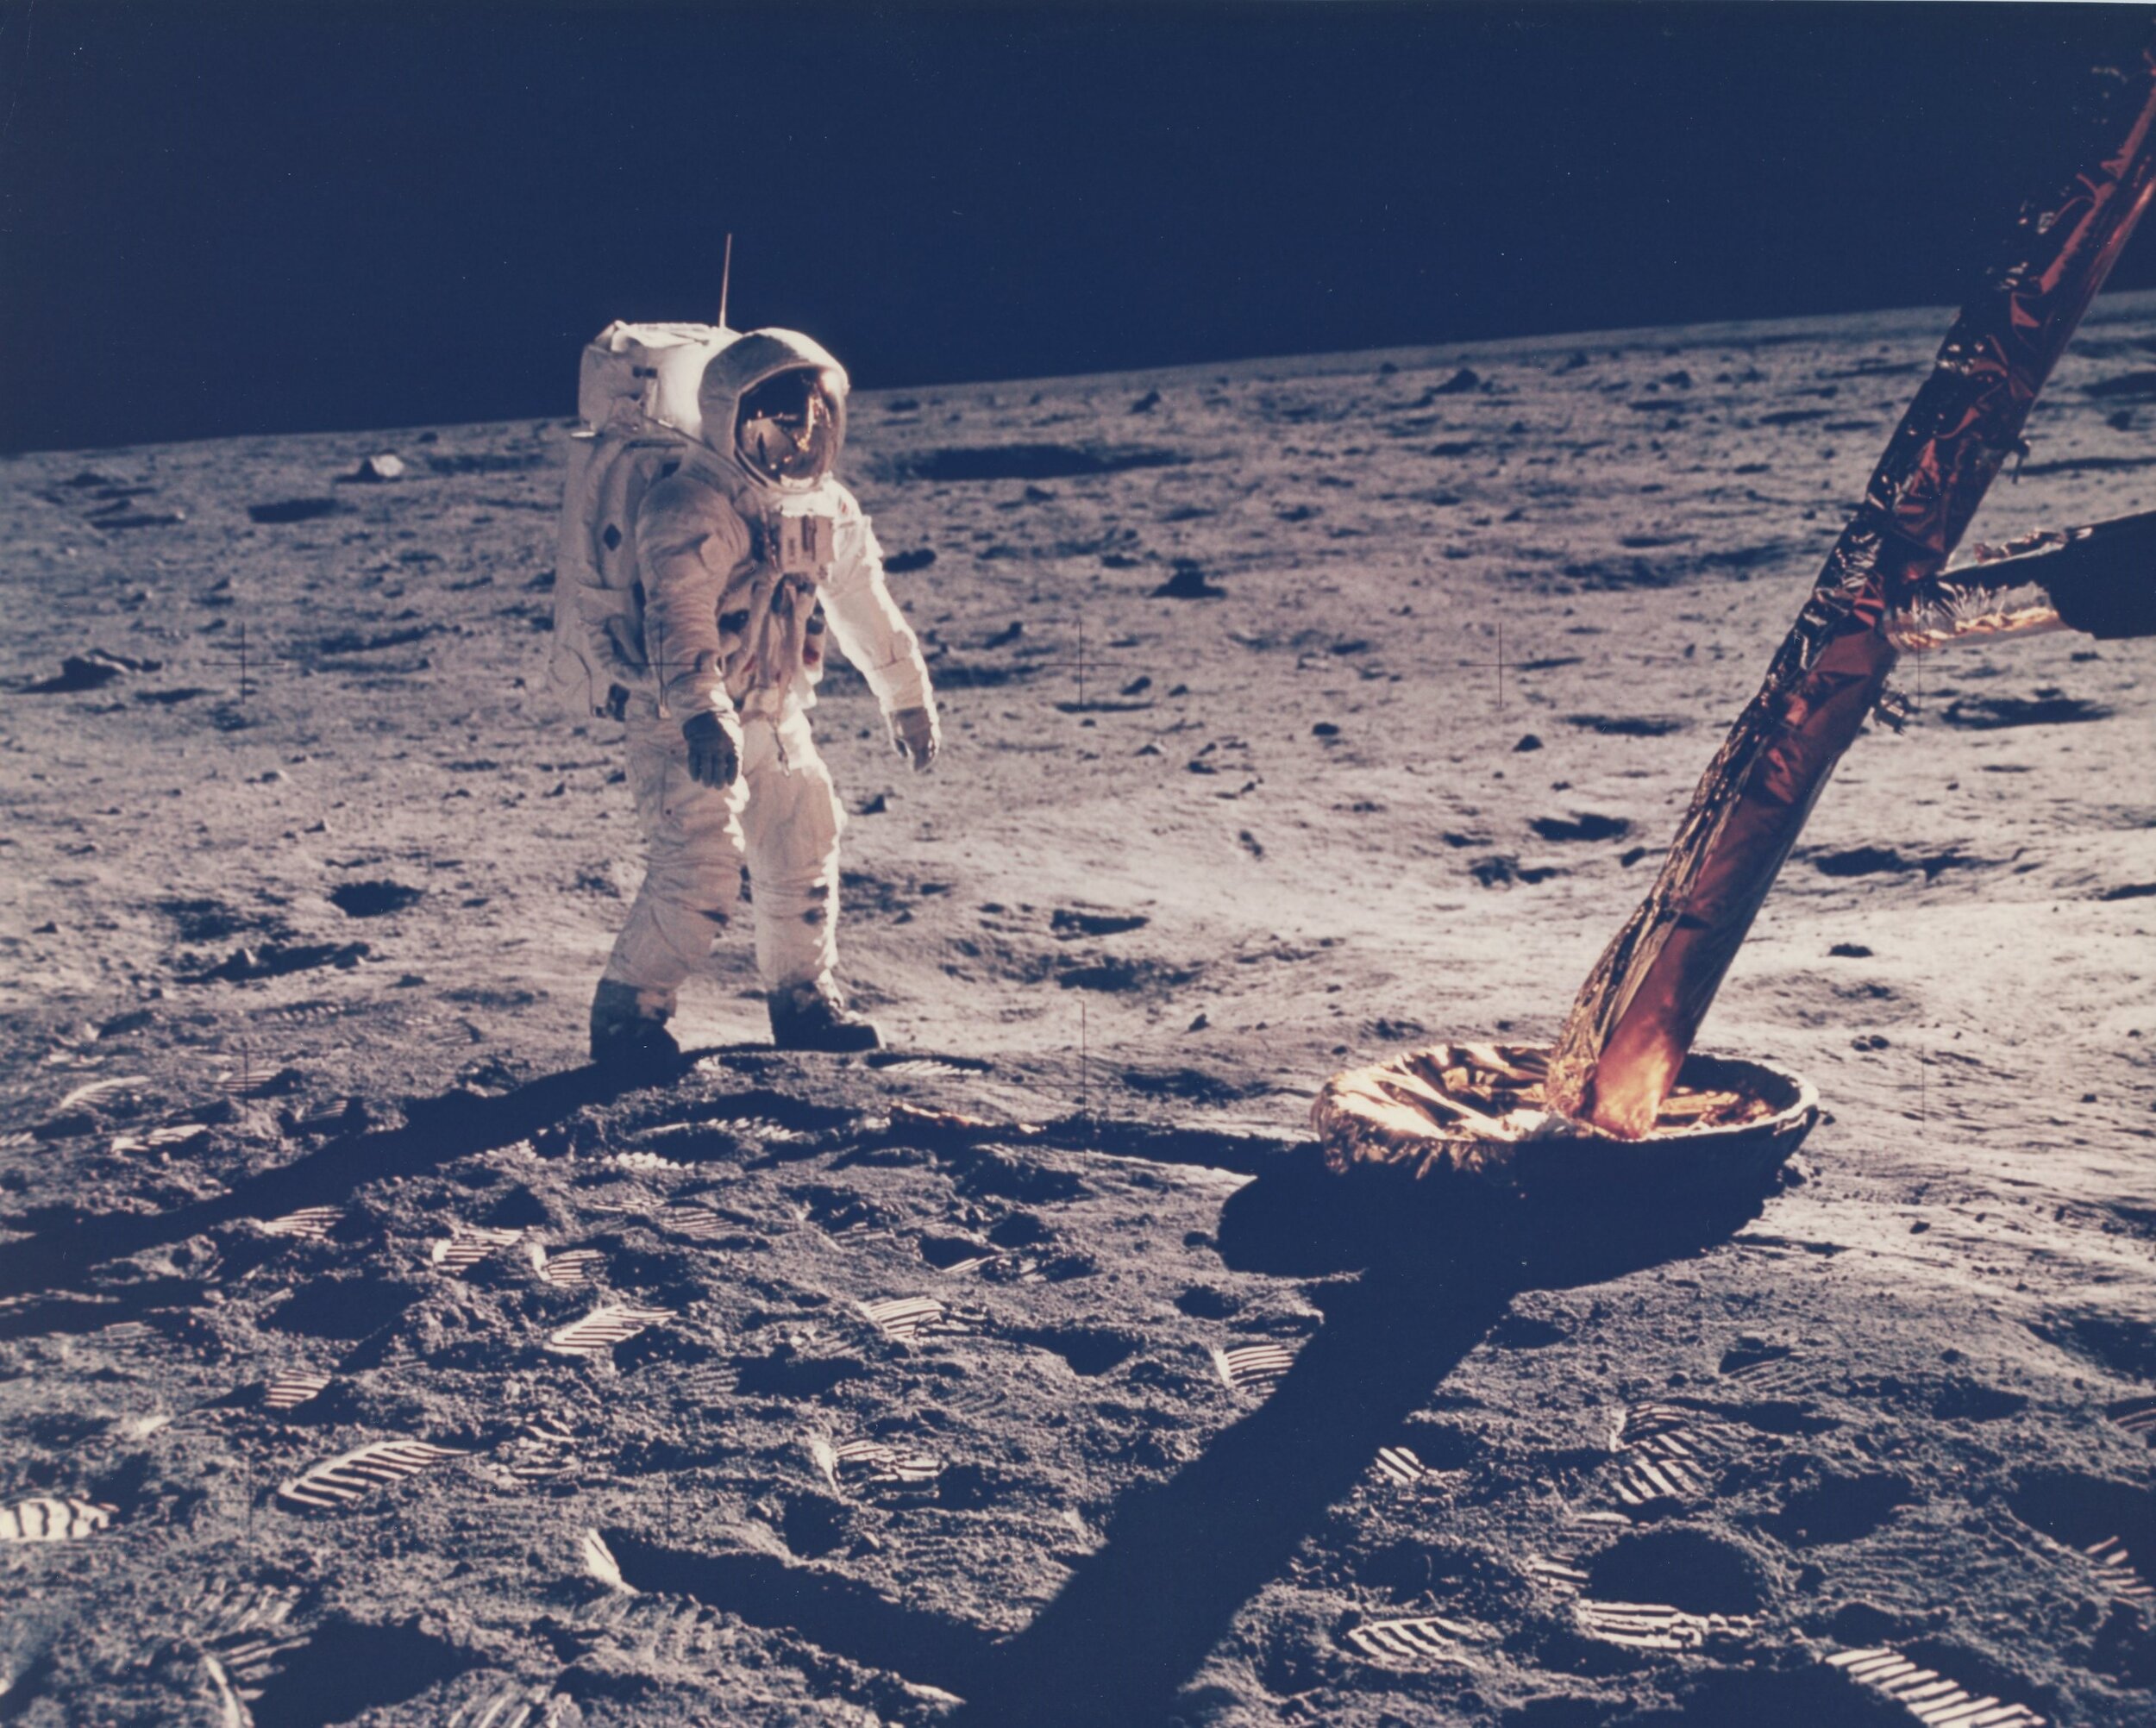 Россия была на луне. Аполлон 11 1969. Апполо 11 на Луне. Базз Олдрин на Луне.